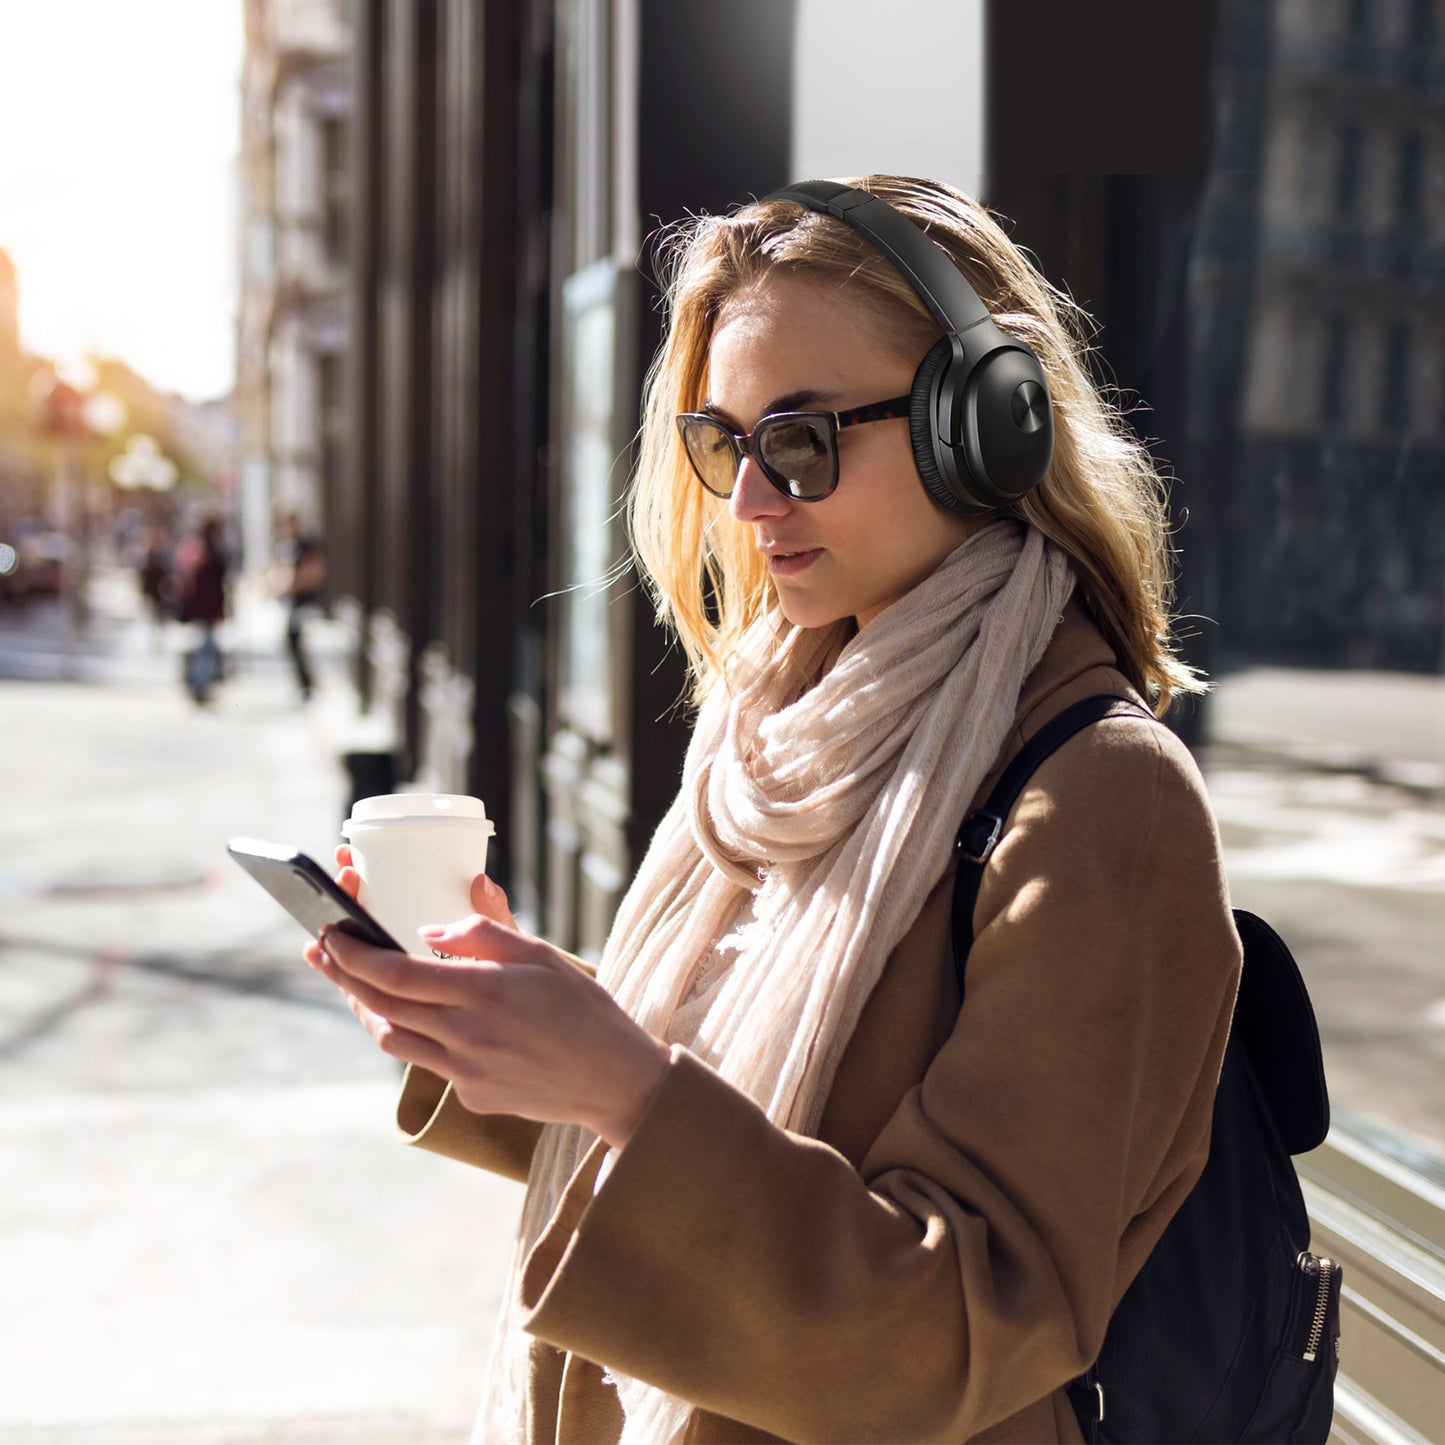 Hybrid Active Noise Cancelling Headphone Wireless Bluetooth SE7